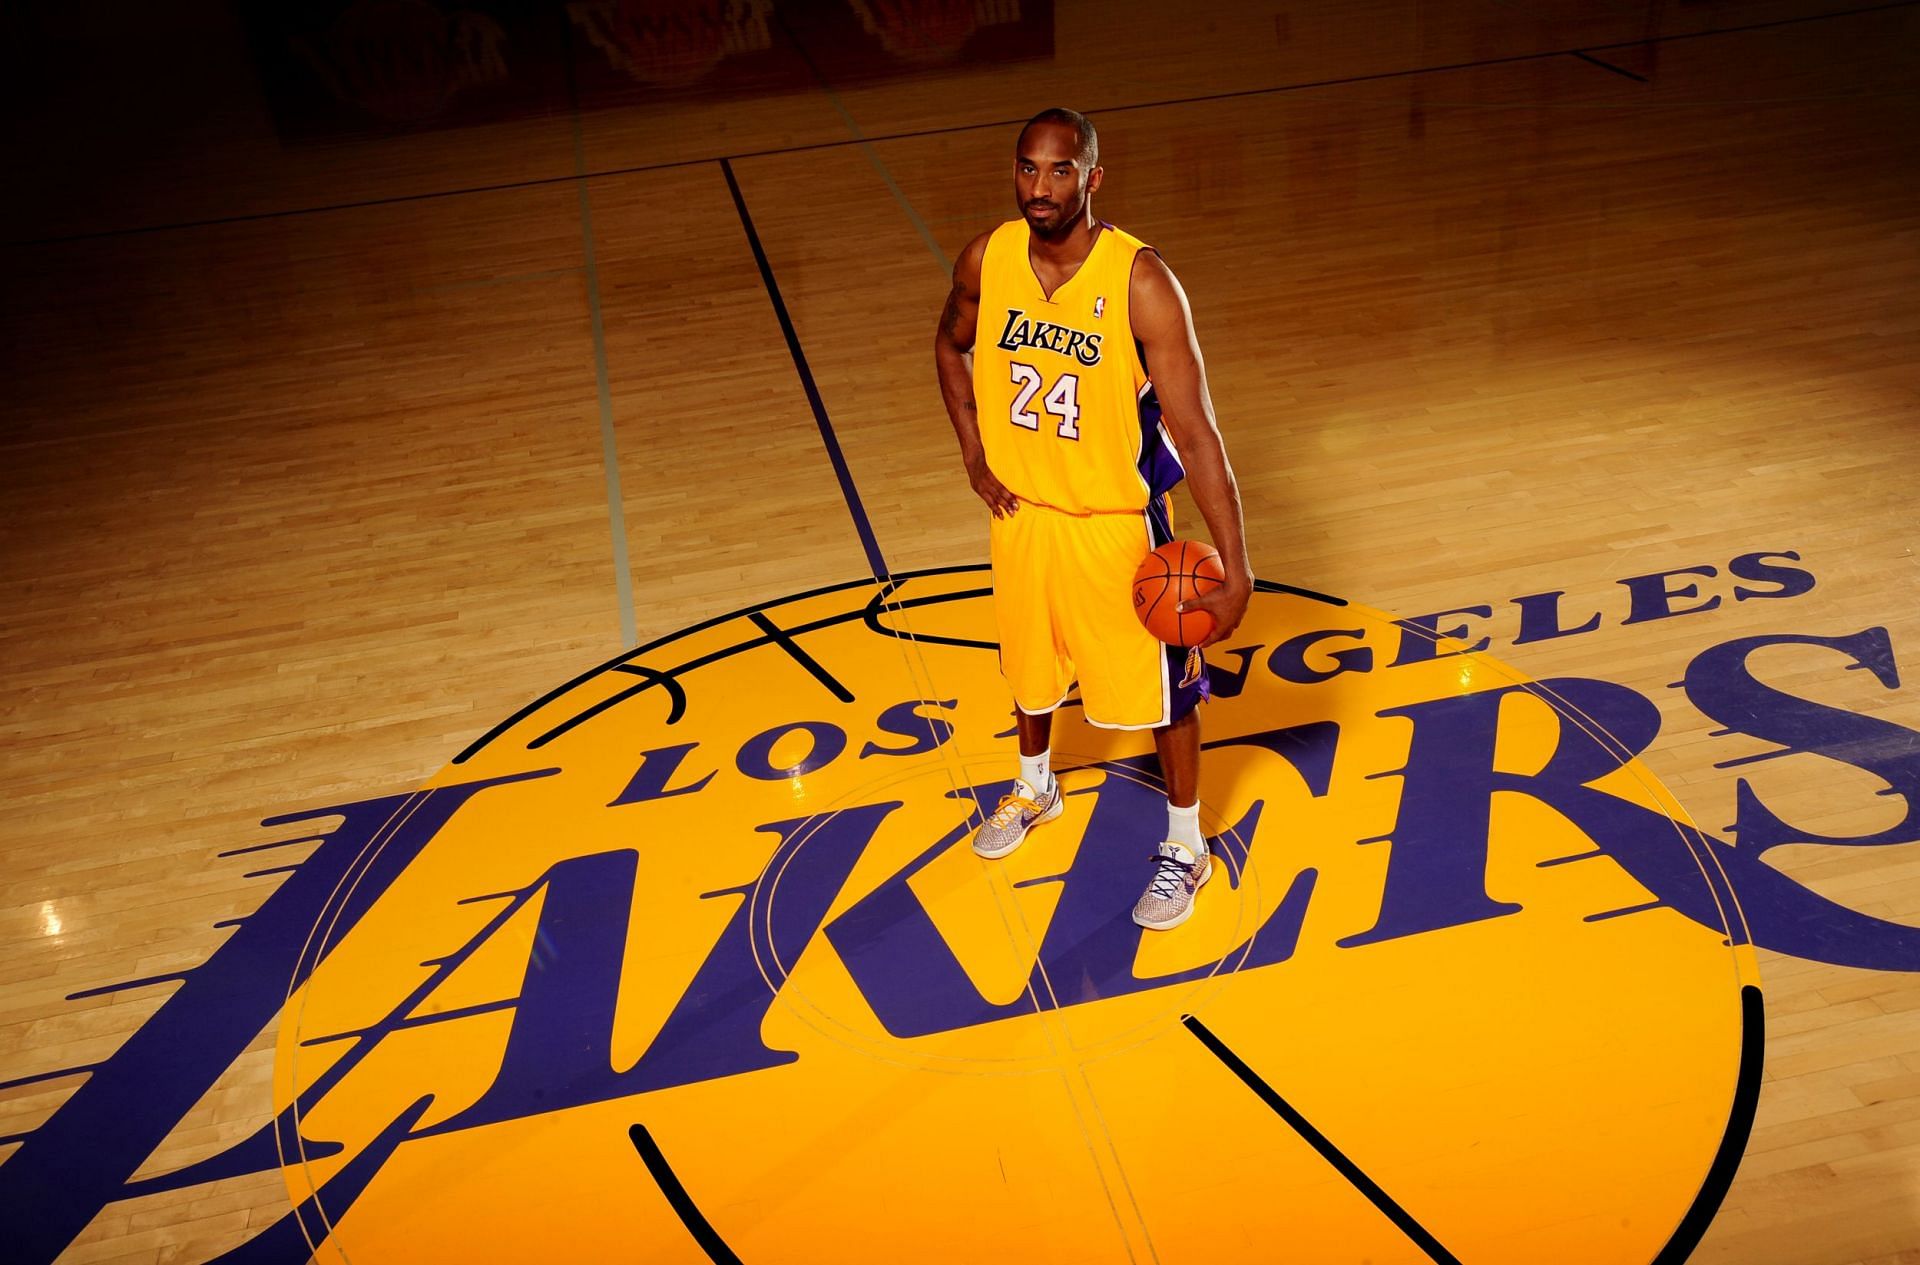 Los Angeles Lakers and NBA legend Kobe Bryant